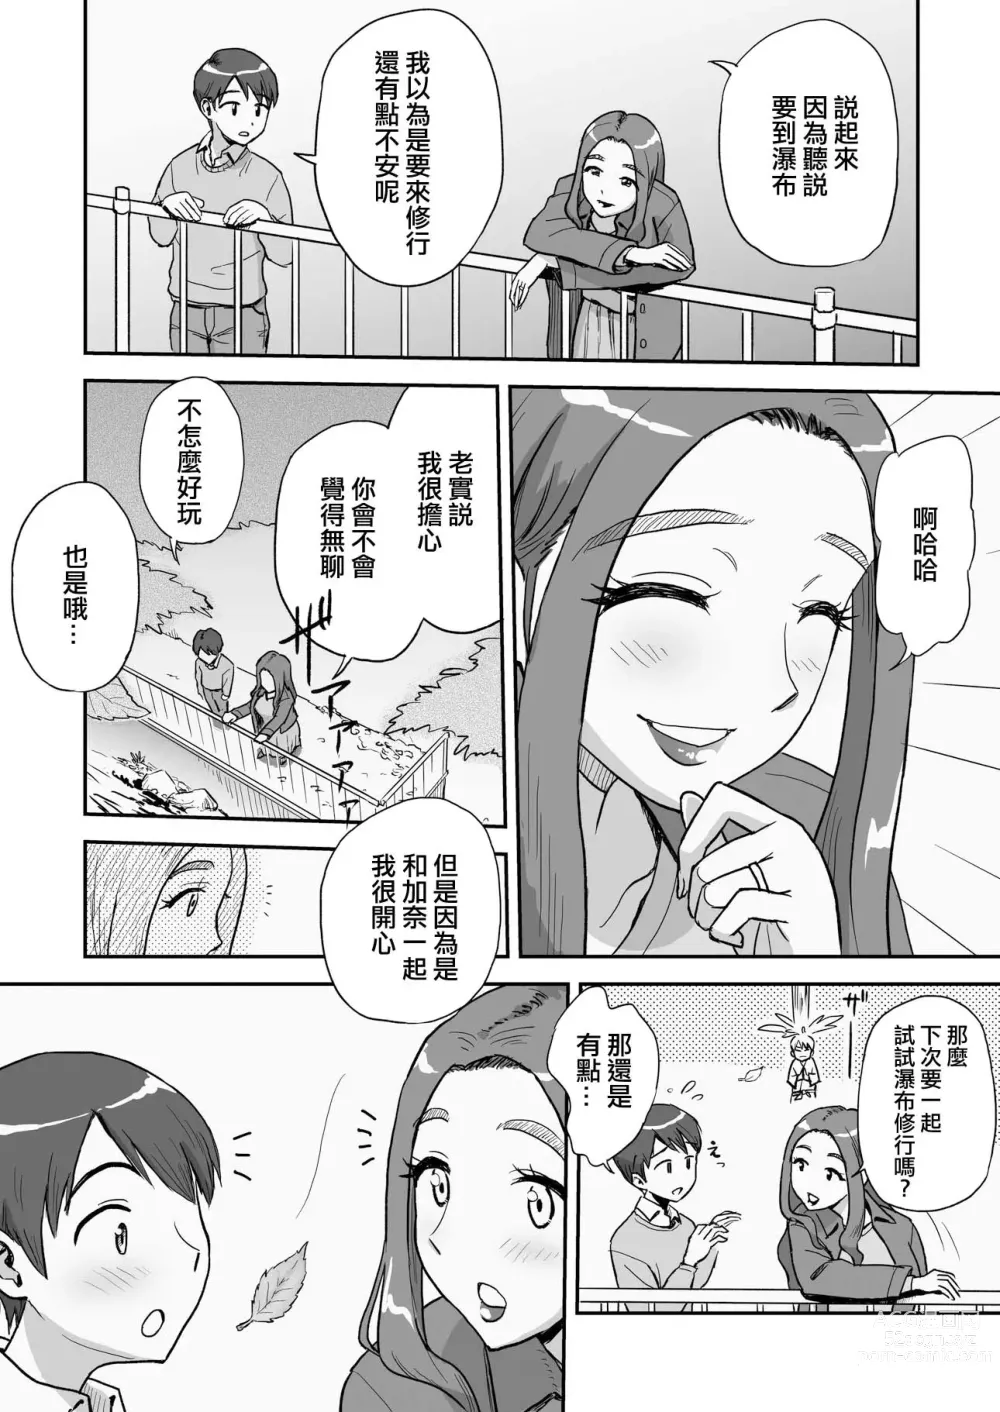 Page 9 of doujinshi 僅此一天的媽媽 這是隻屬於我們...兩人的秘密...哦?....